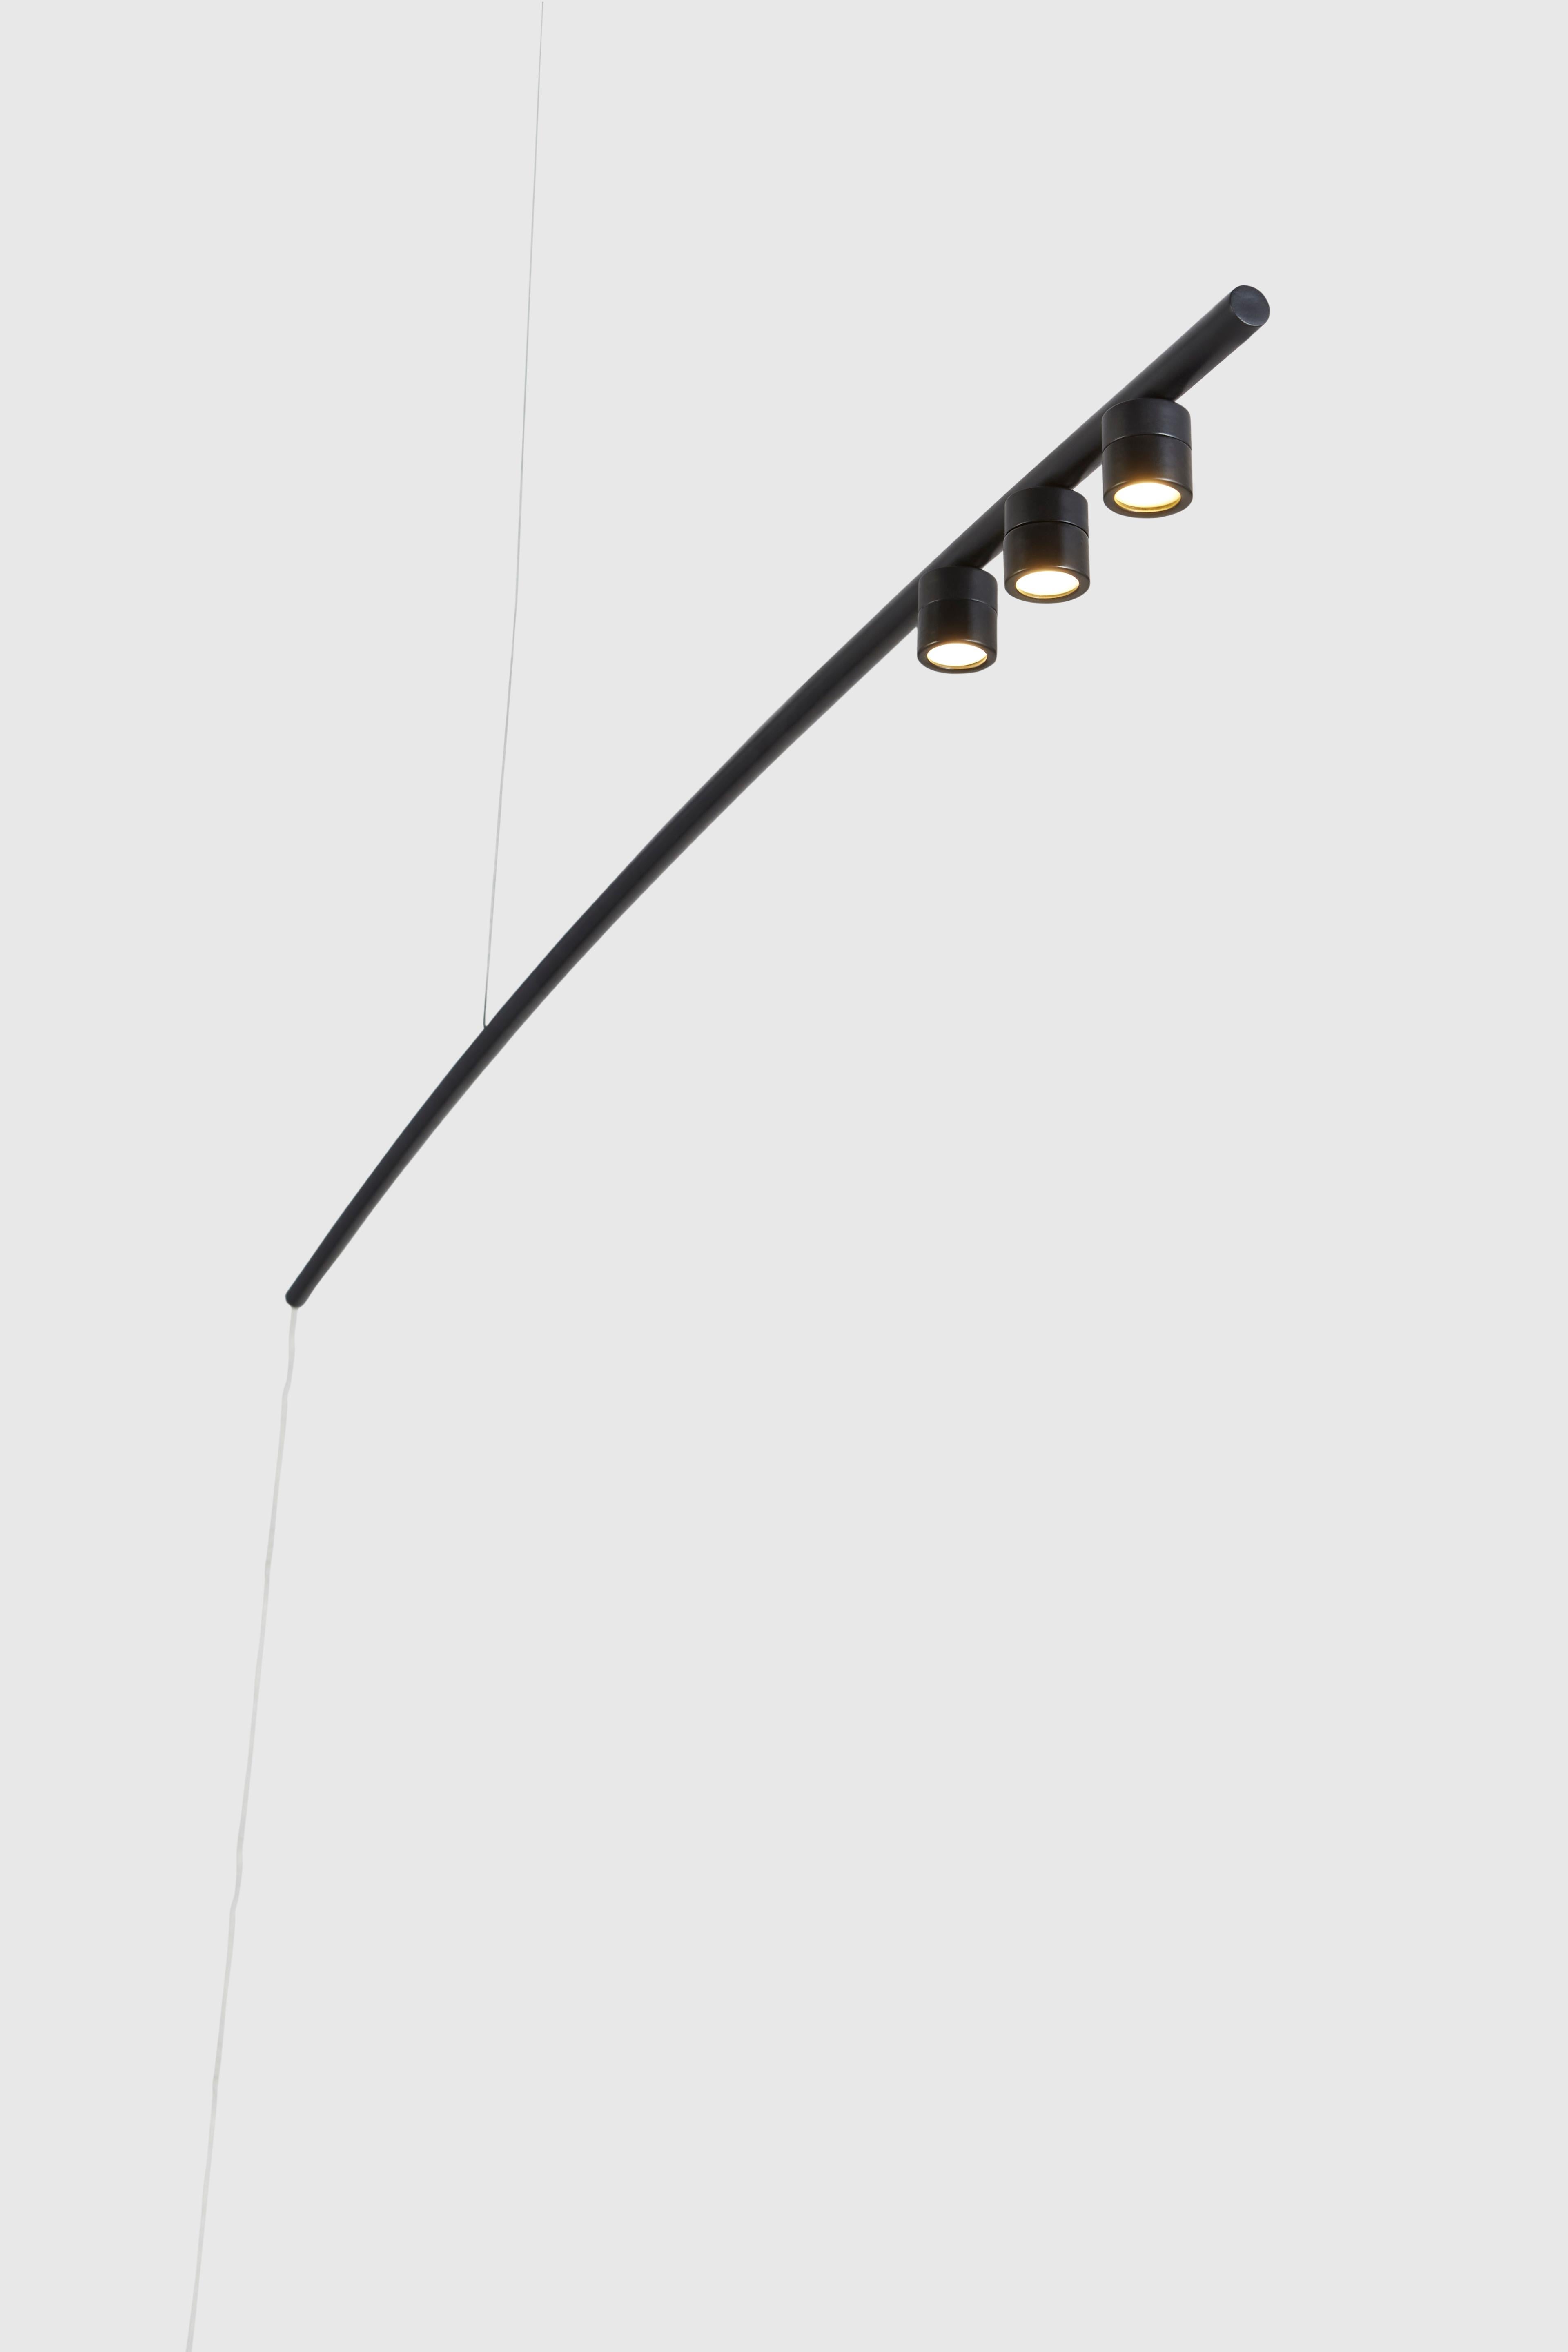 Other Unique Line Floor Lamp by Hatsu